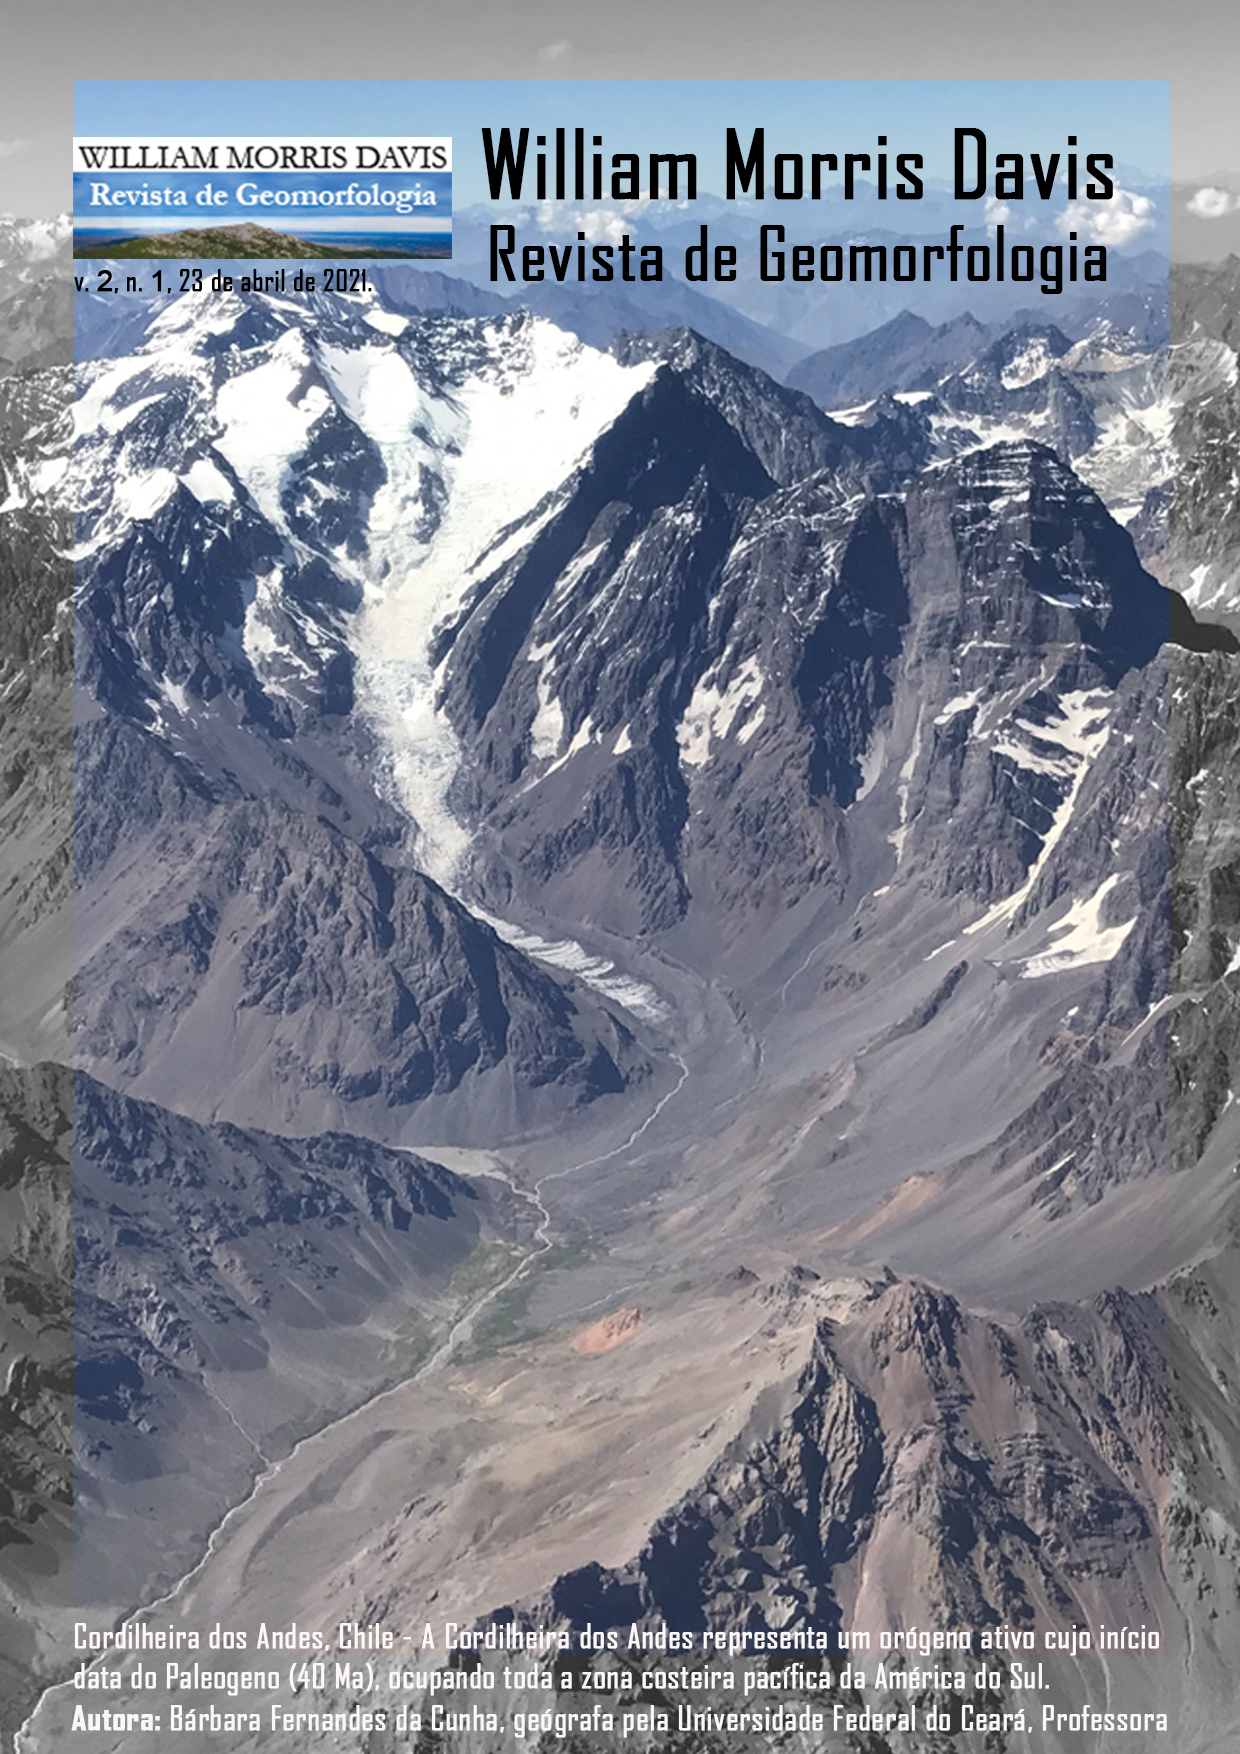 					Afficher Vol. 2 No 1 (2021): William Morris Davis - Revista de Geomorfologia
				